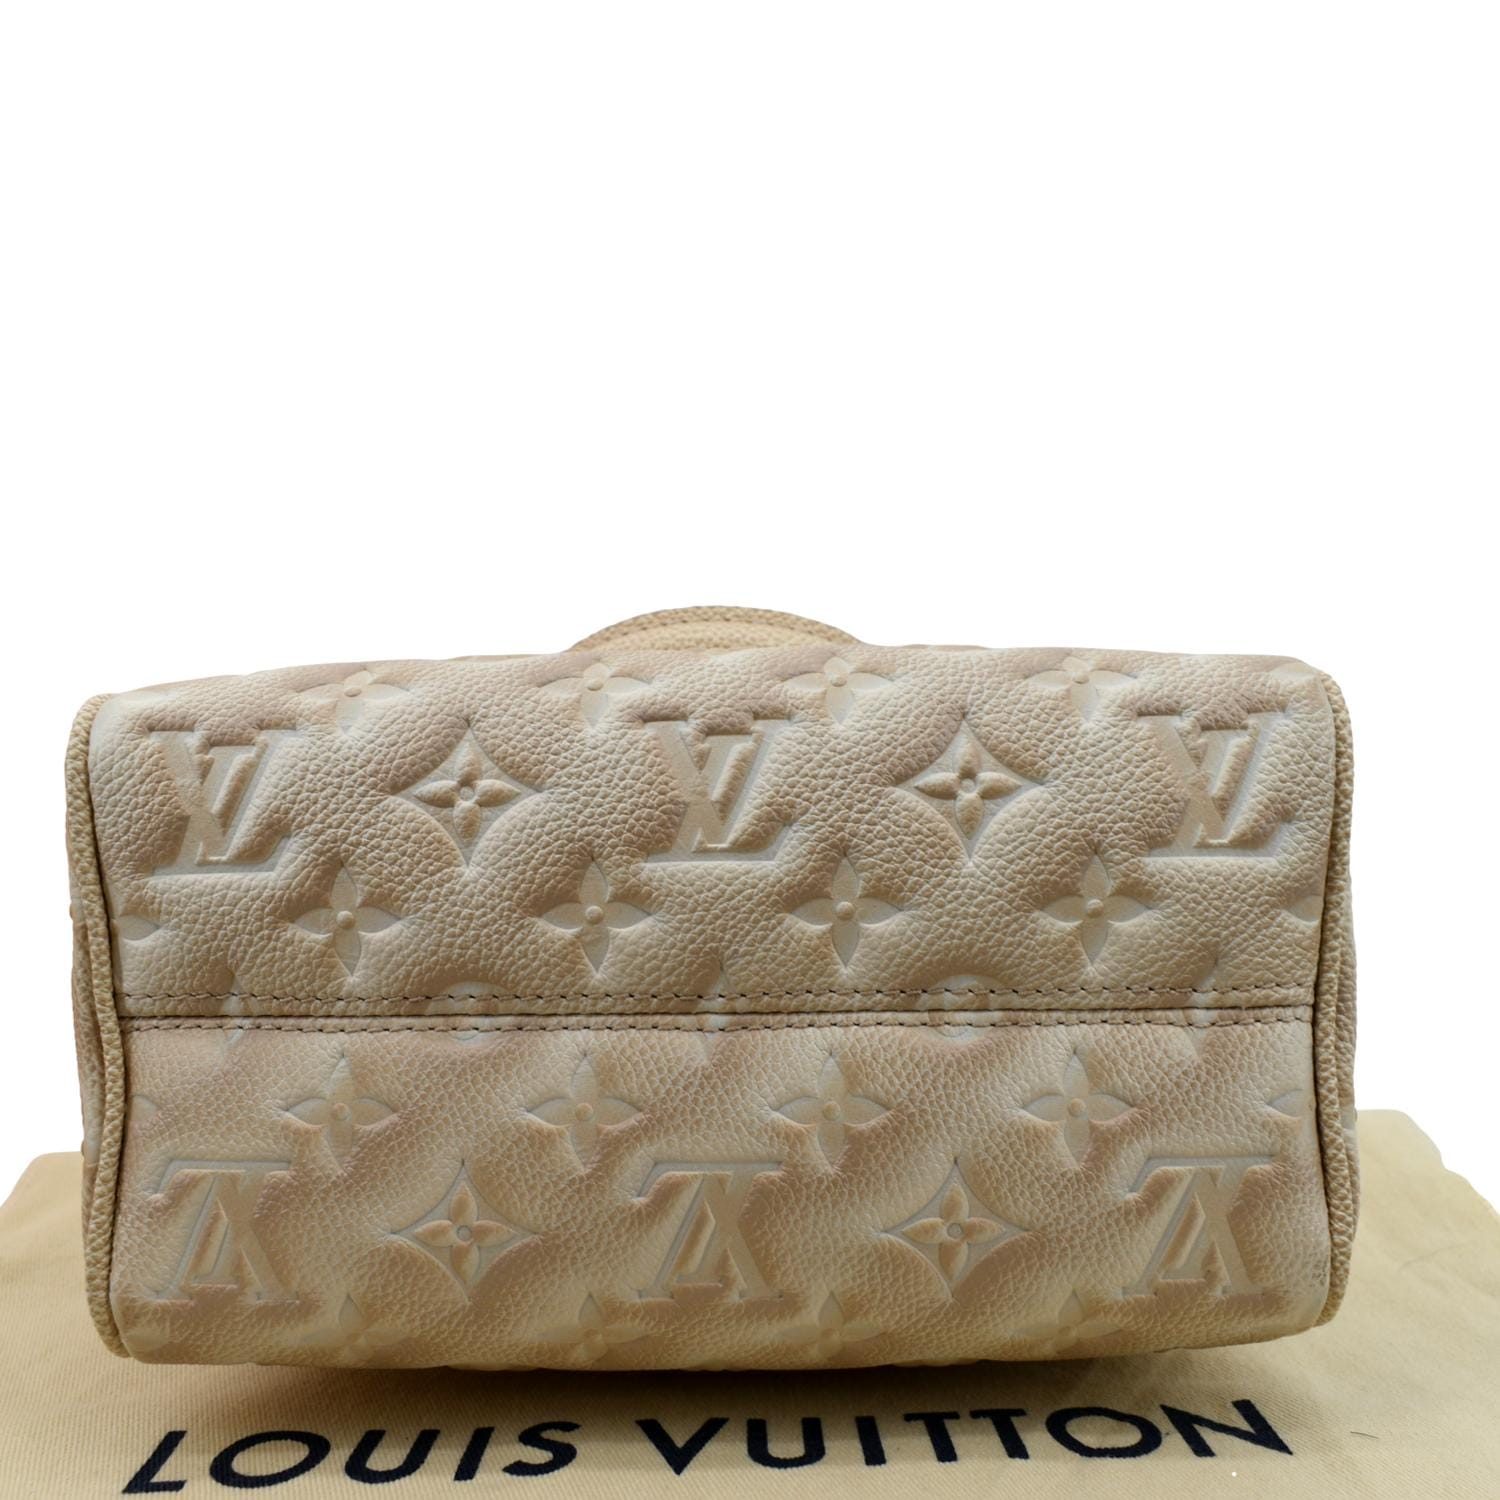 Authentic Louis Vuitton Medium Envelope type Handbag Dust Bag Beige ~8” X  13”